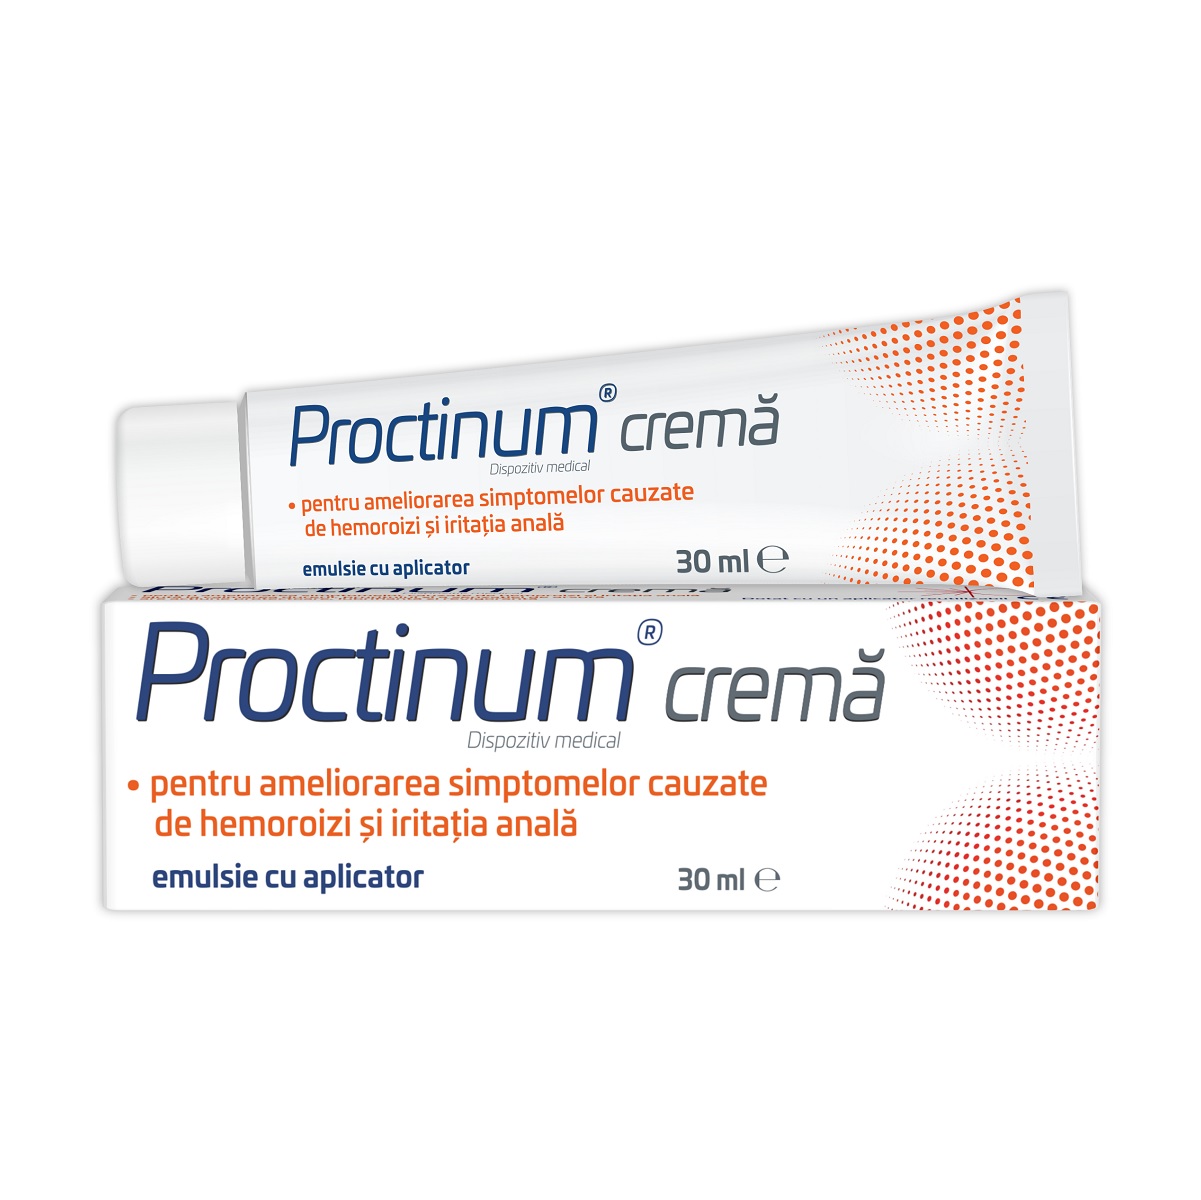 Afectiuni hemoroidale - Proctinum Crema, 30ml, Zdrovit, farmacieieftina.ro